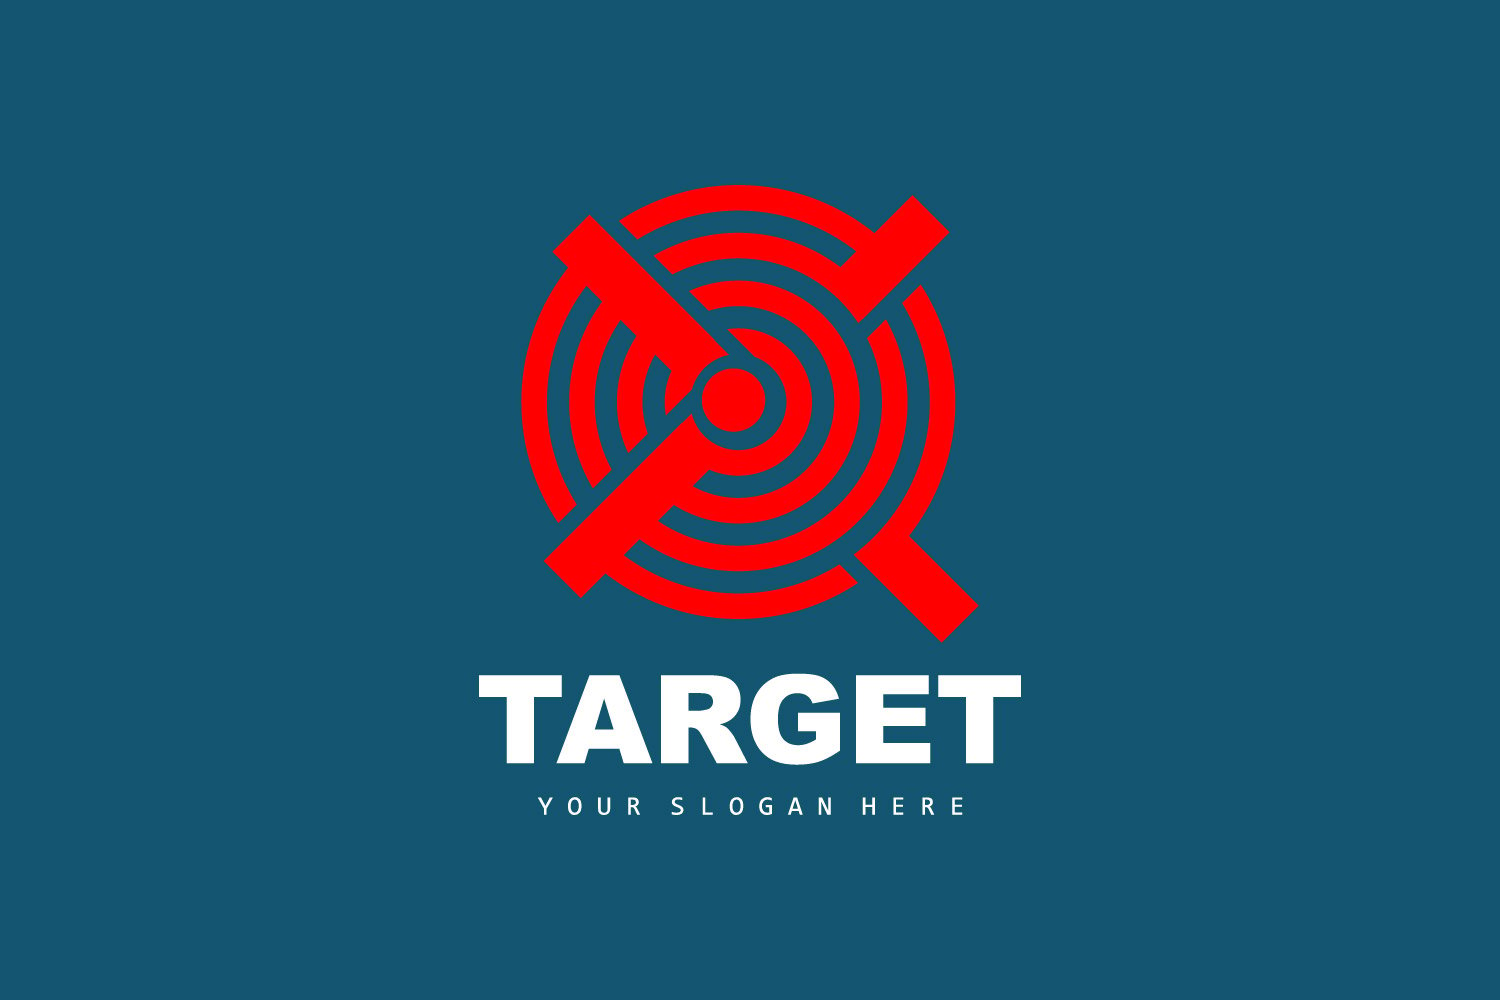 Template #405723 Vector Target Webdesign Template - Logo template Preview